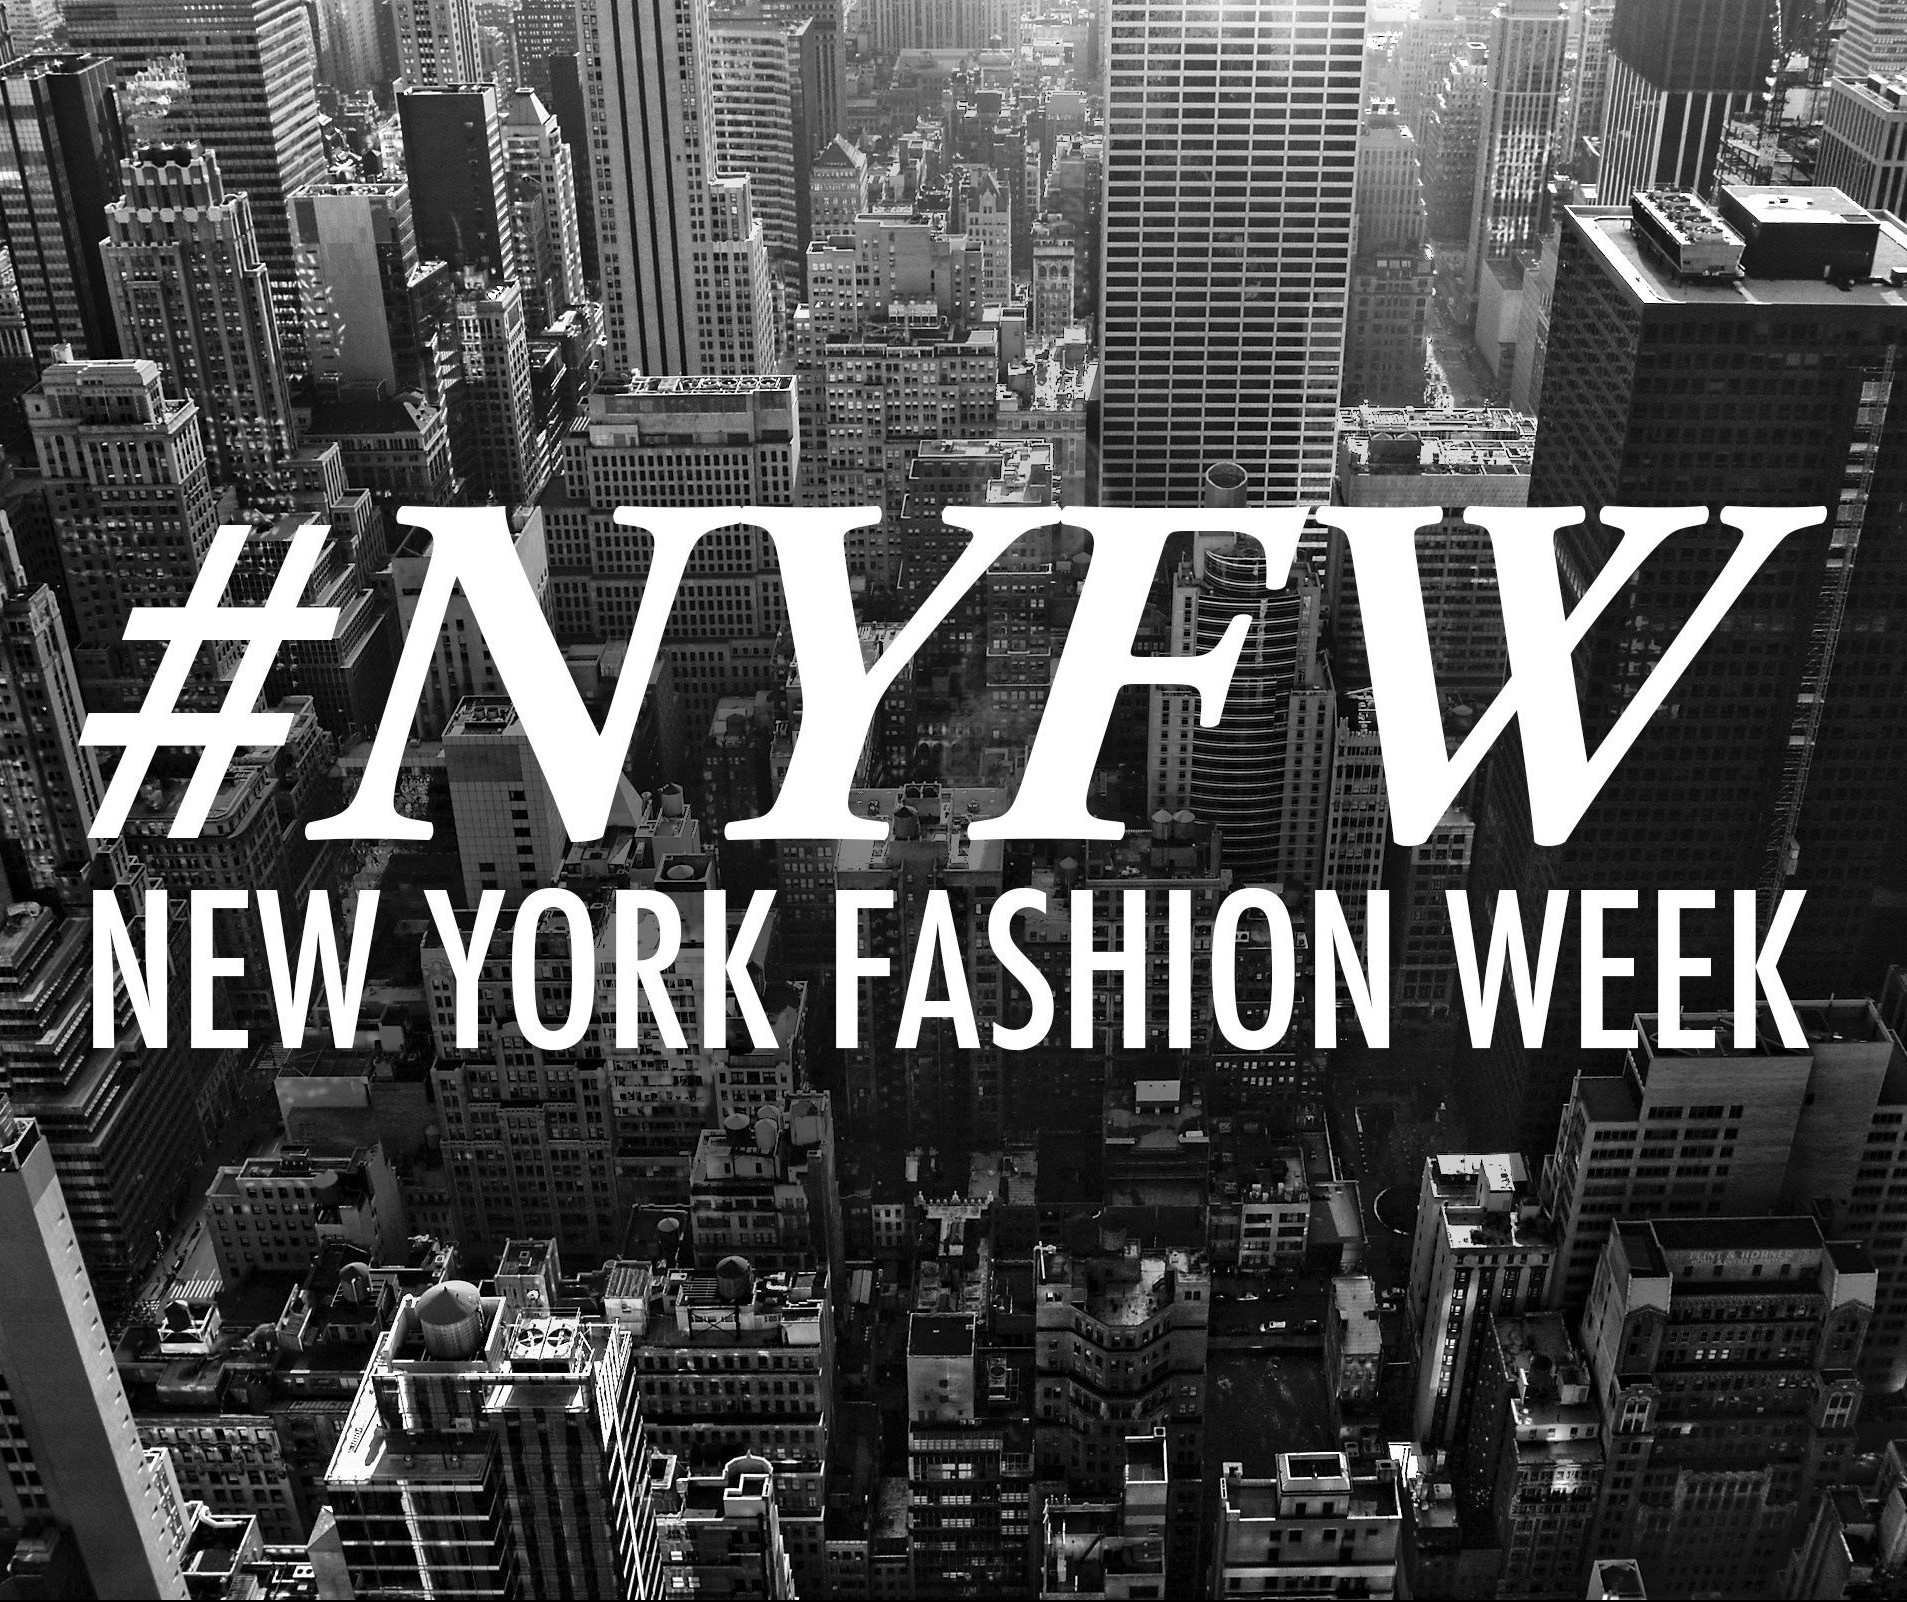 Assunto de hoje: New York Fashion Week